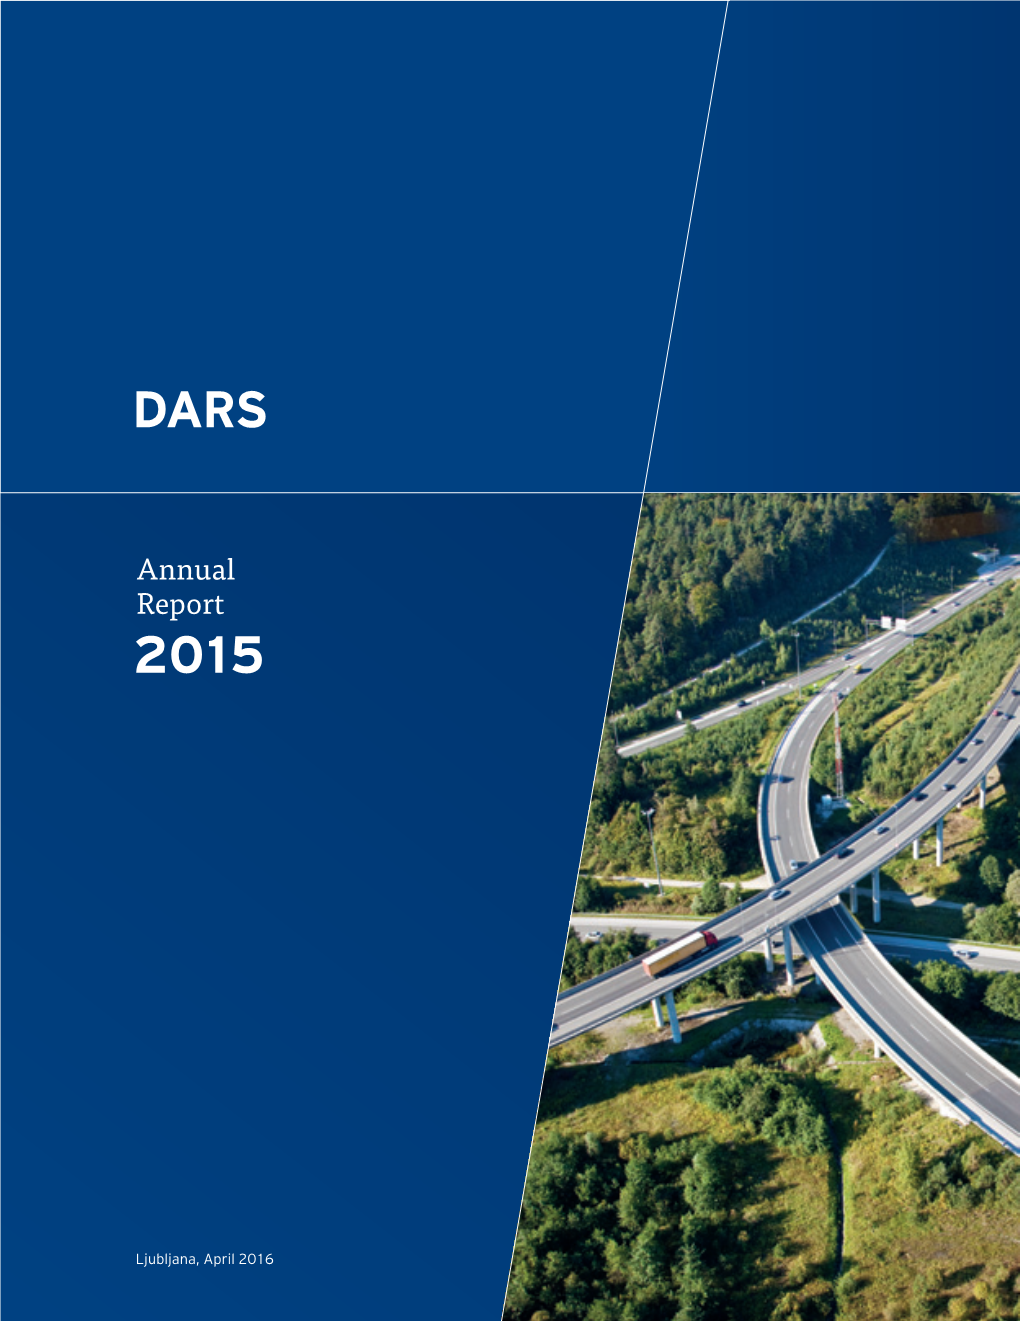 Annual Report for 2015 to Marjan Mačkošek the Supervisory Board on 13 April 2016